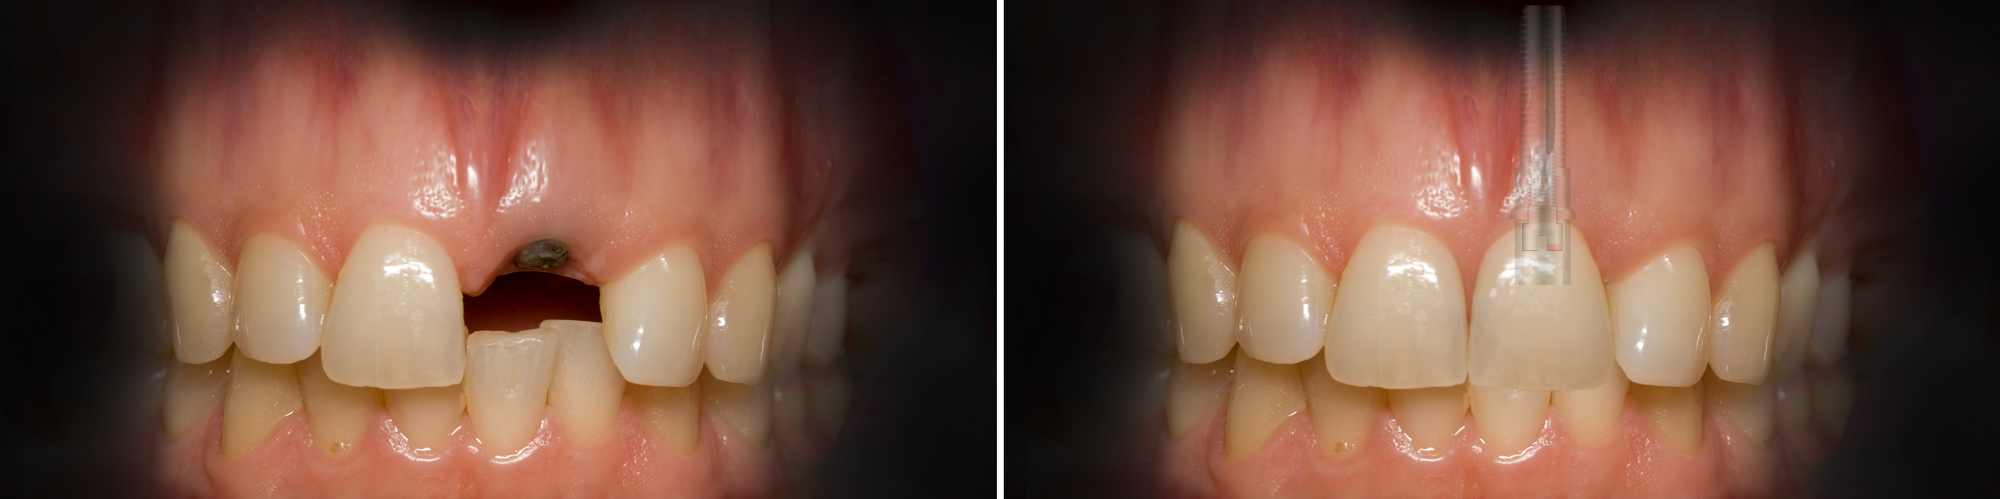 Implant-Crown-2-in-1-on-11-v3-02.07.2018Fabulous Teeth & Beautiful Implantsron winter of fabulous teeth @ seaside dental laboratory & clinic Takapuna Auckland New Zealand.jpg 